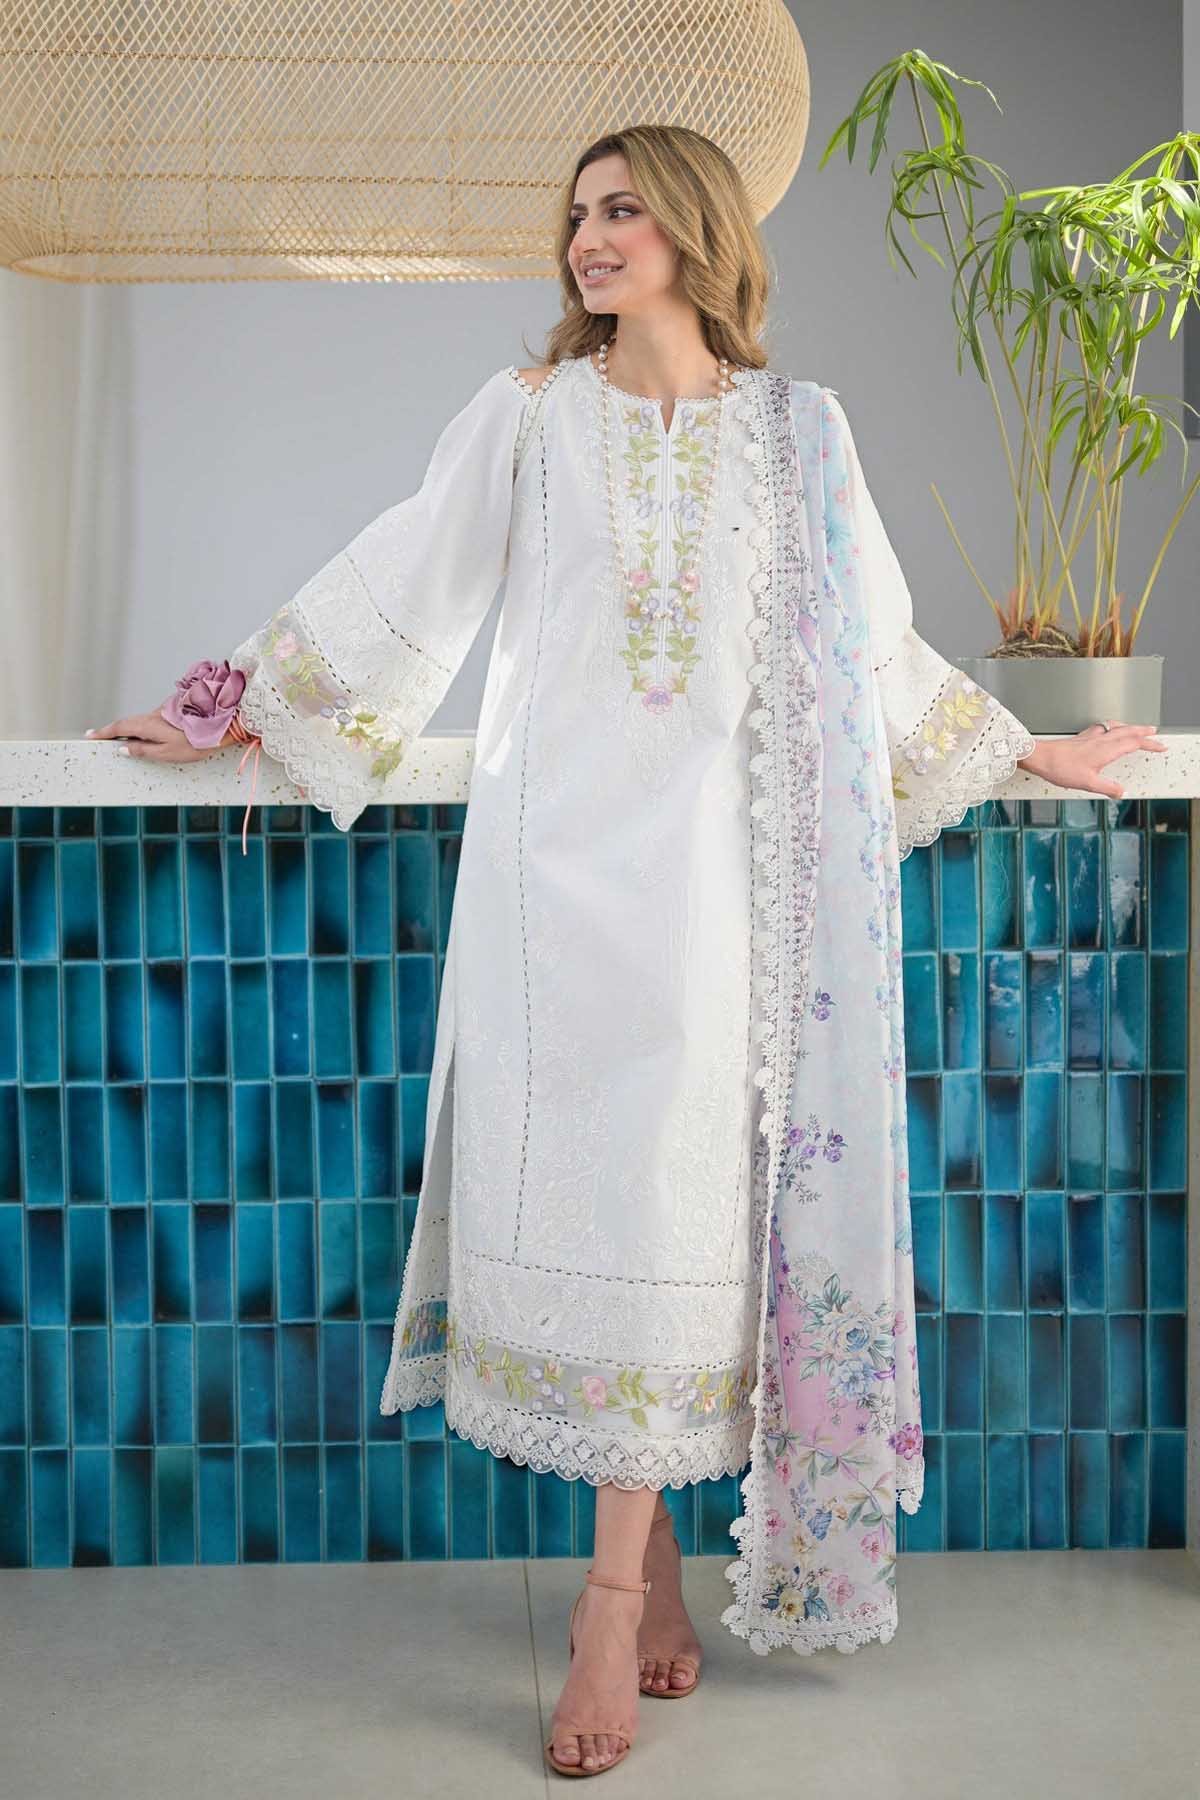 Agha Noor women new dress design pakistan top clothing brand sale fashion trending girls suit